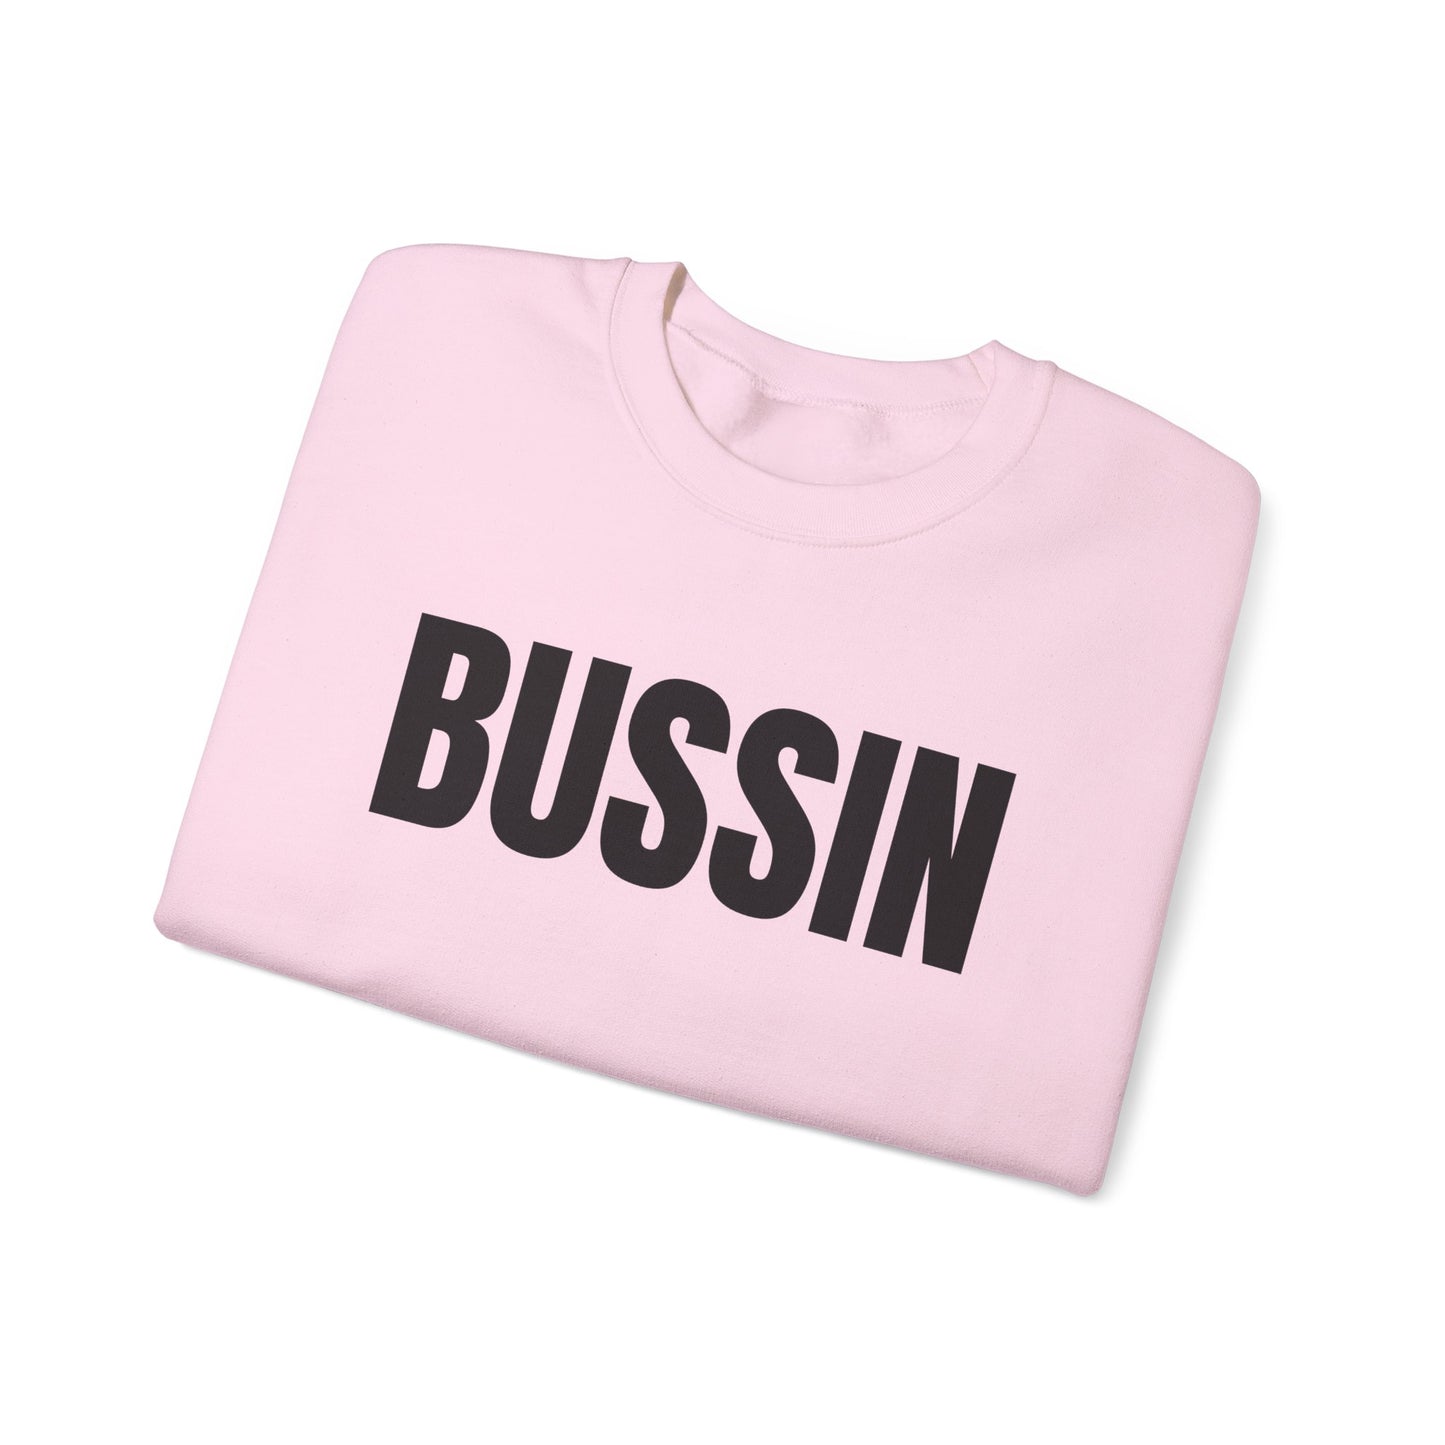 BUSSIN' Unisex Heavy Blend Crewneck Sweatshirt: Comfort, Style, and Ethical Craftsmanship